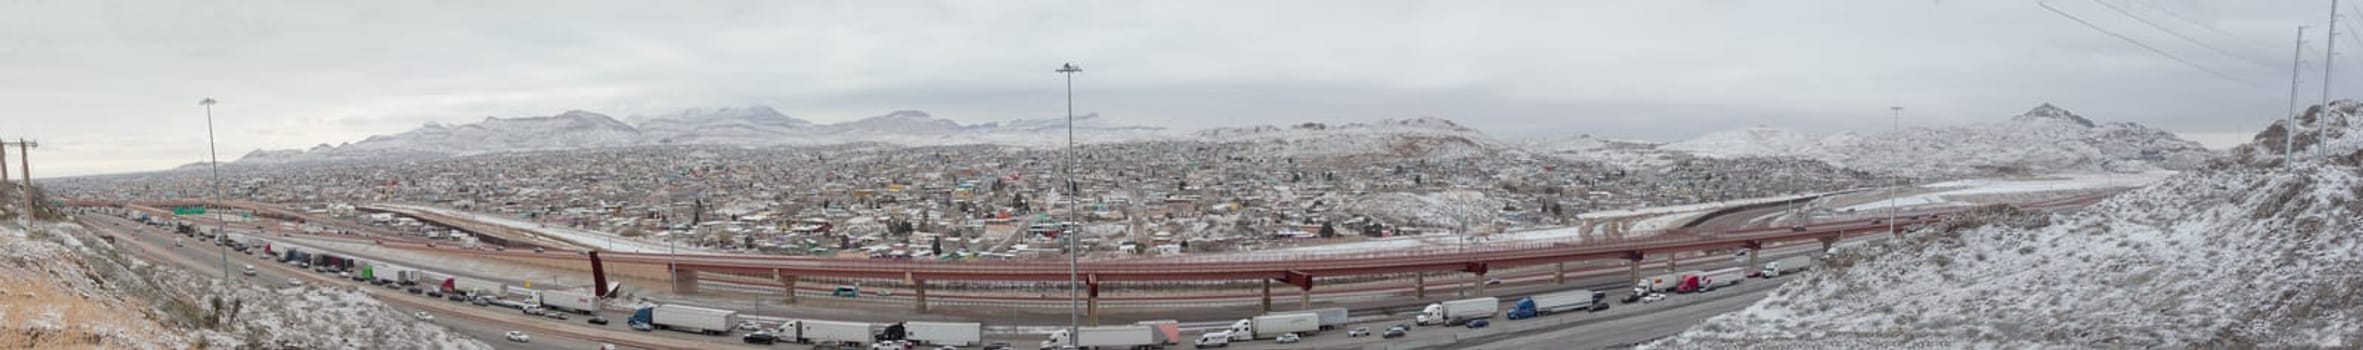 Ciudad Juarez, Chihuahua / Mexico - February 2022 - snow mountain and highway panorama